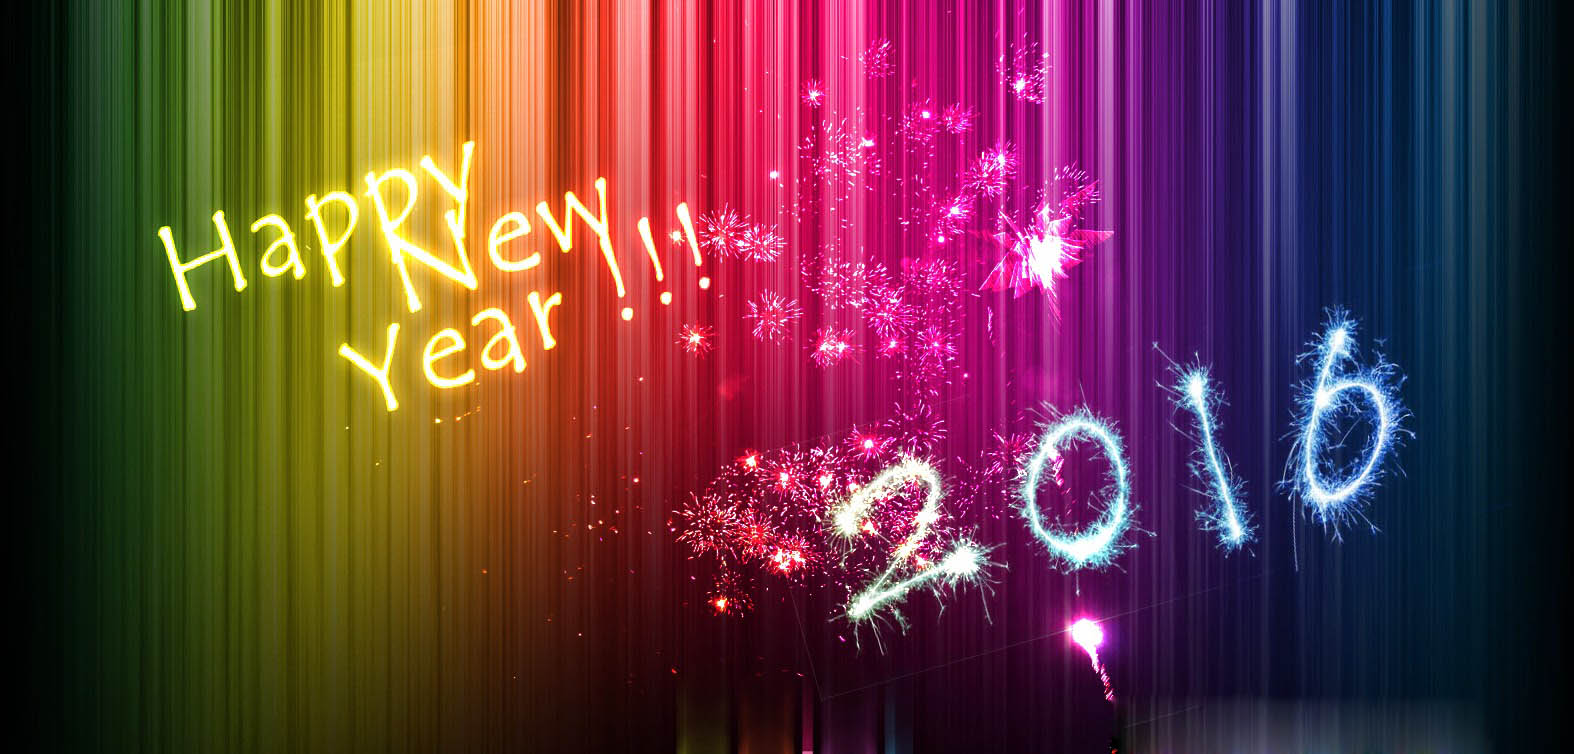 Happy New Year Image